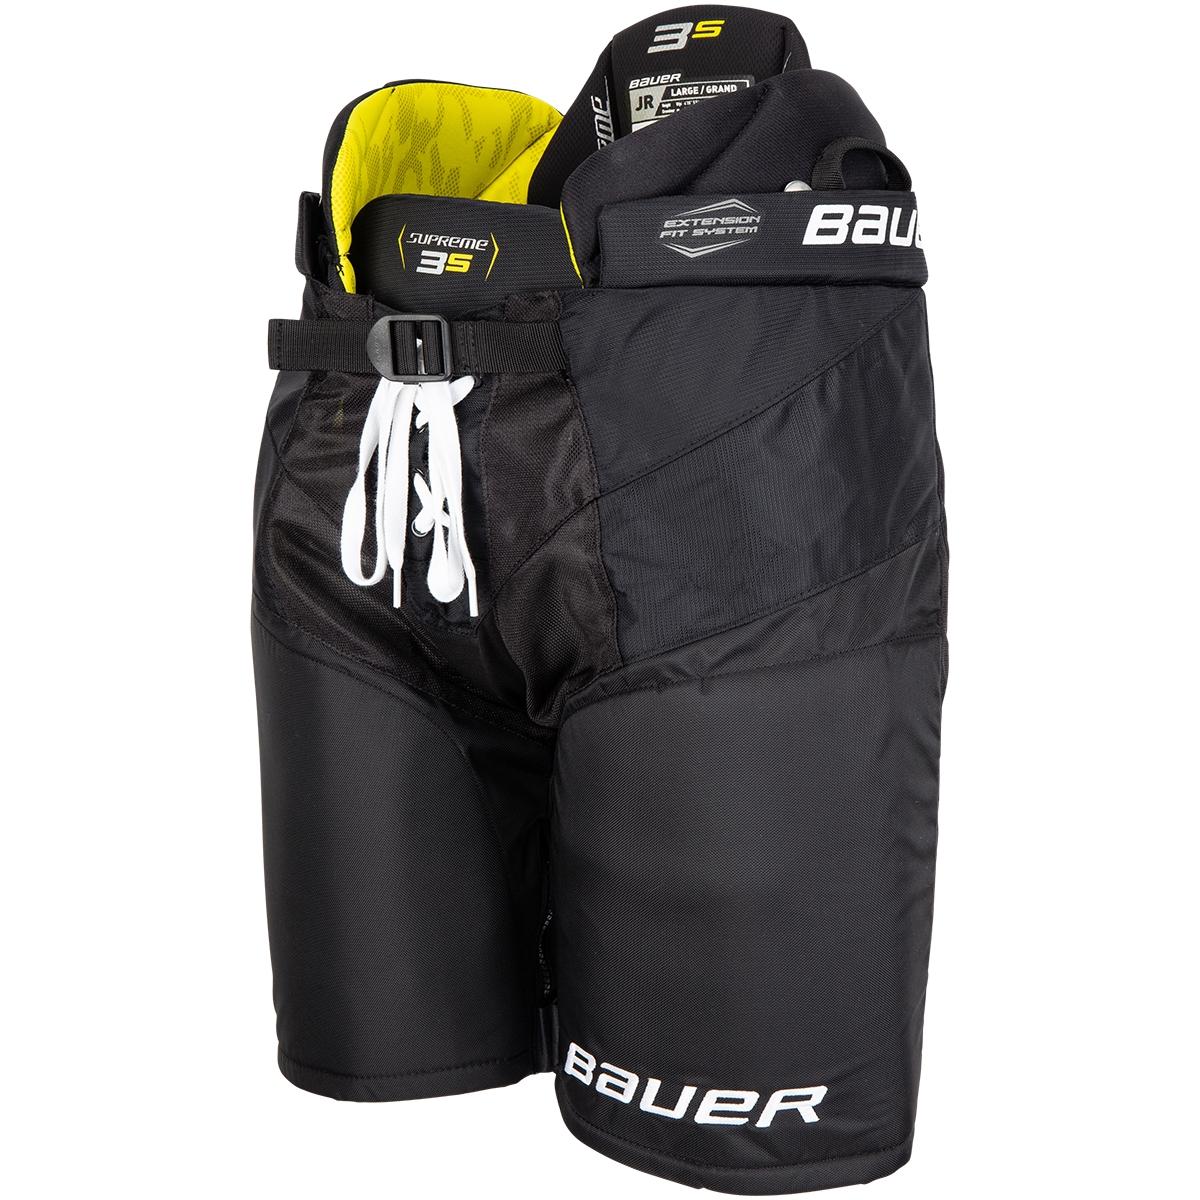 Bauer Supreme 3S Jr. Hockey Pantsproduct zoom image #1